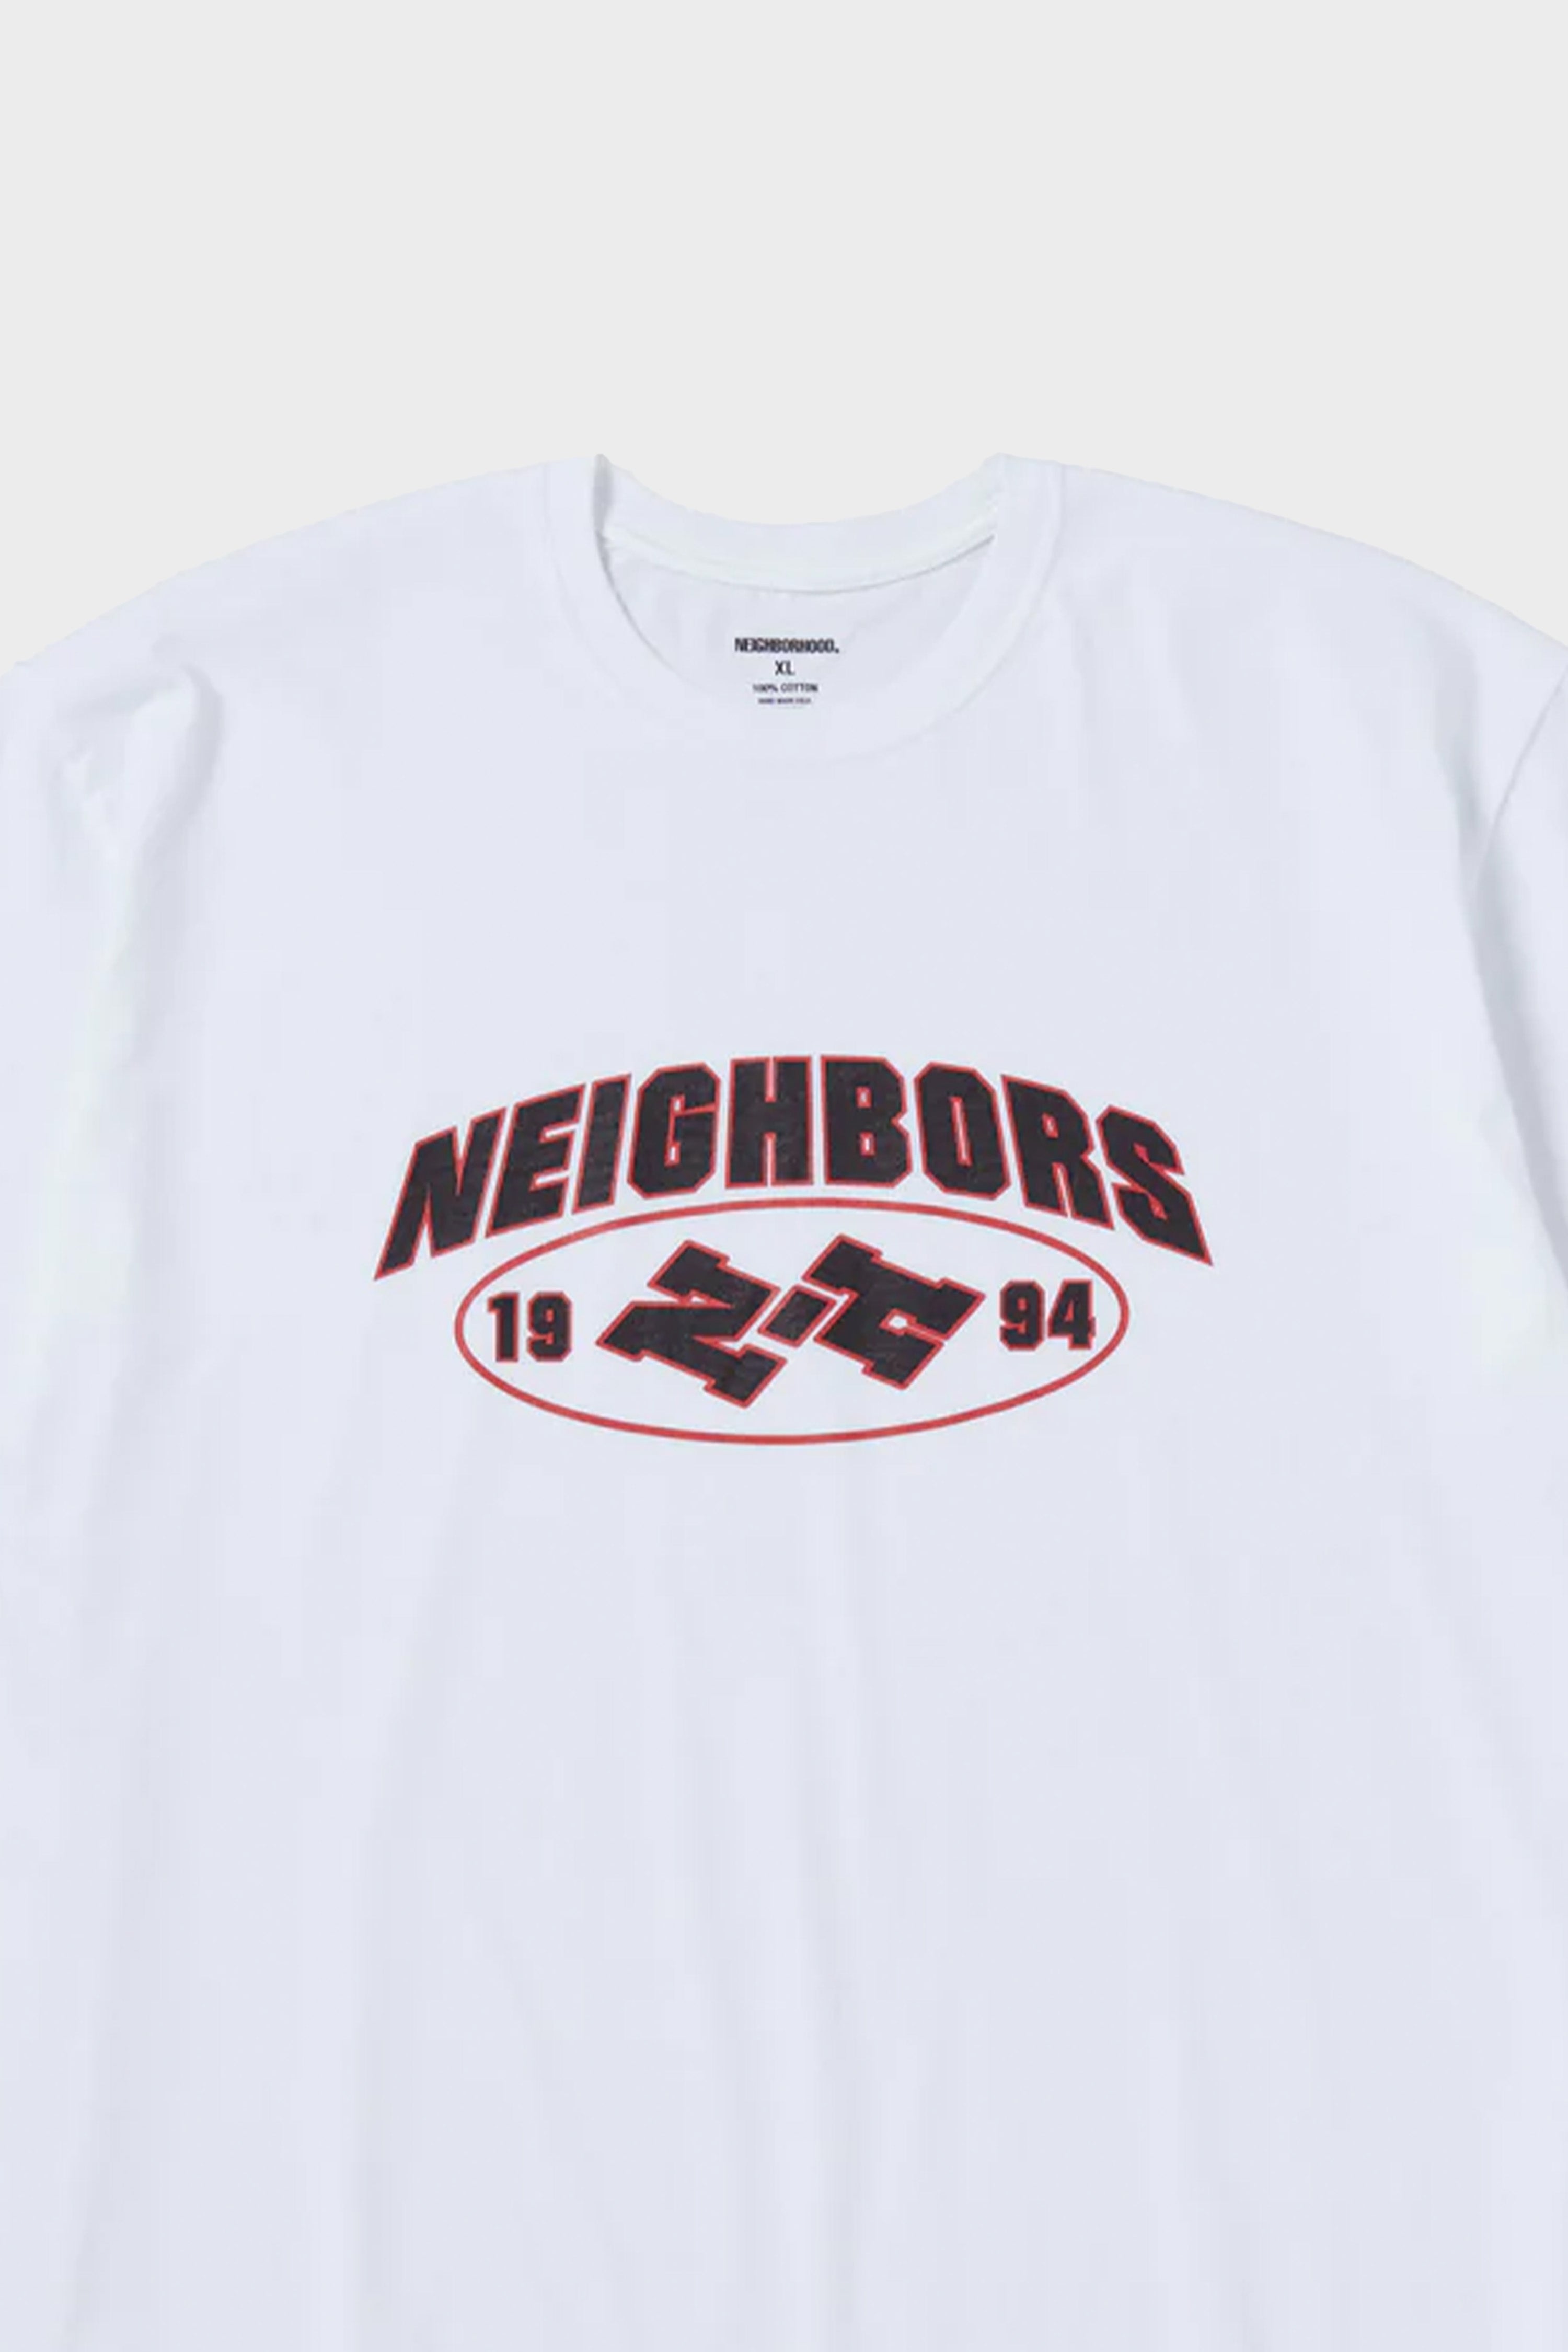 Selectshop FRAME - NEIGHBORHOOD NH . Tee SS-9 T-Shirts Concept Store Dubai